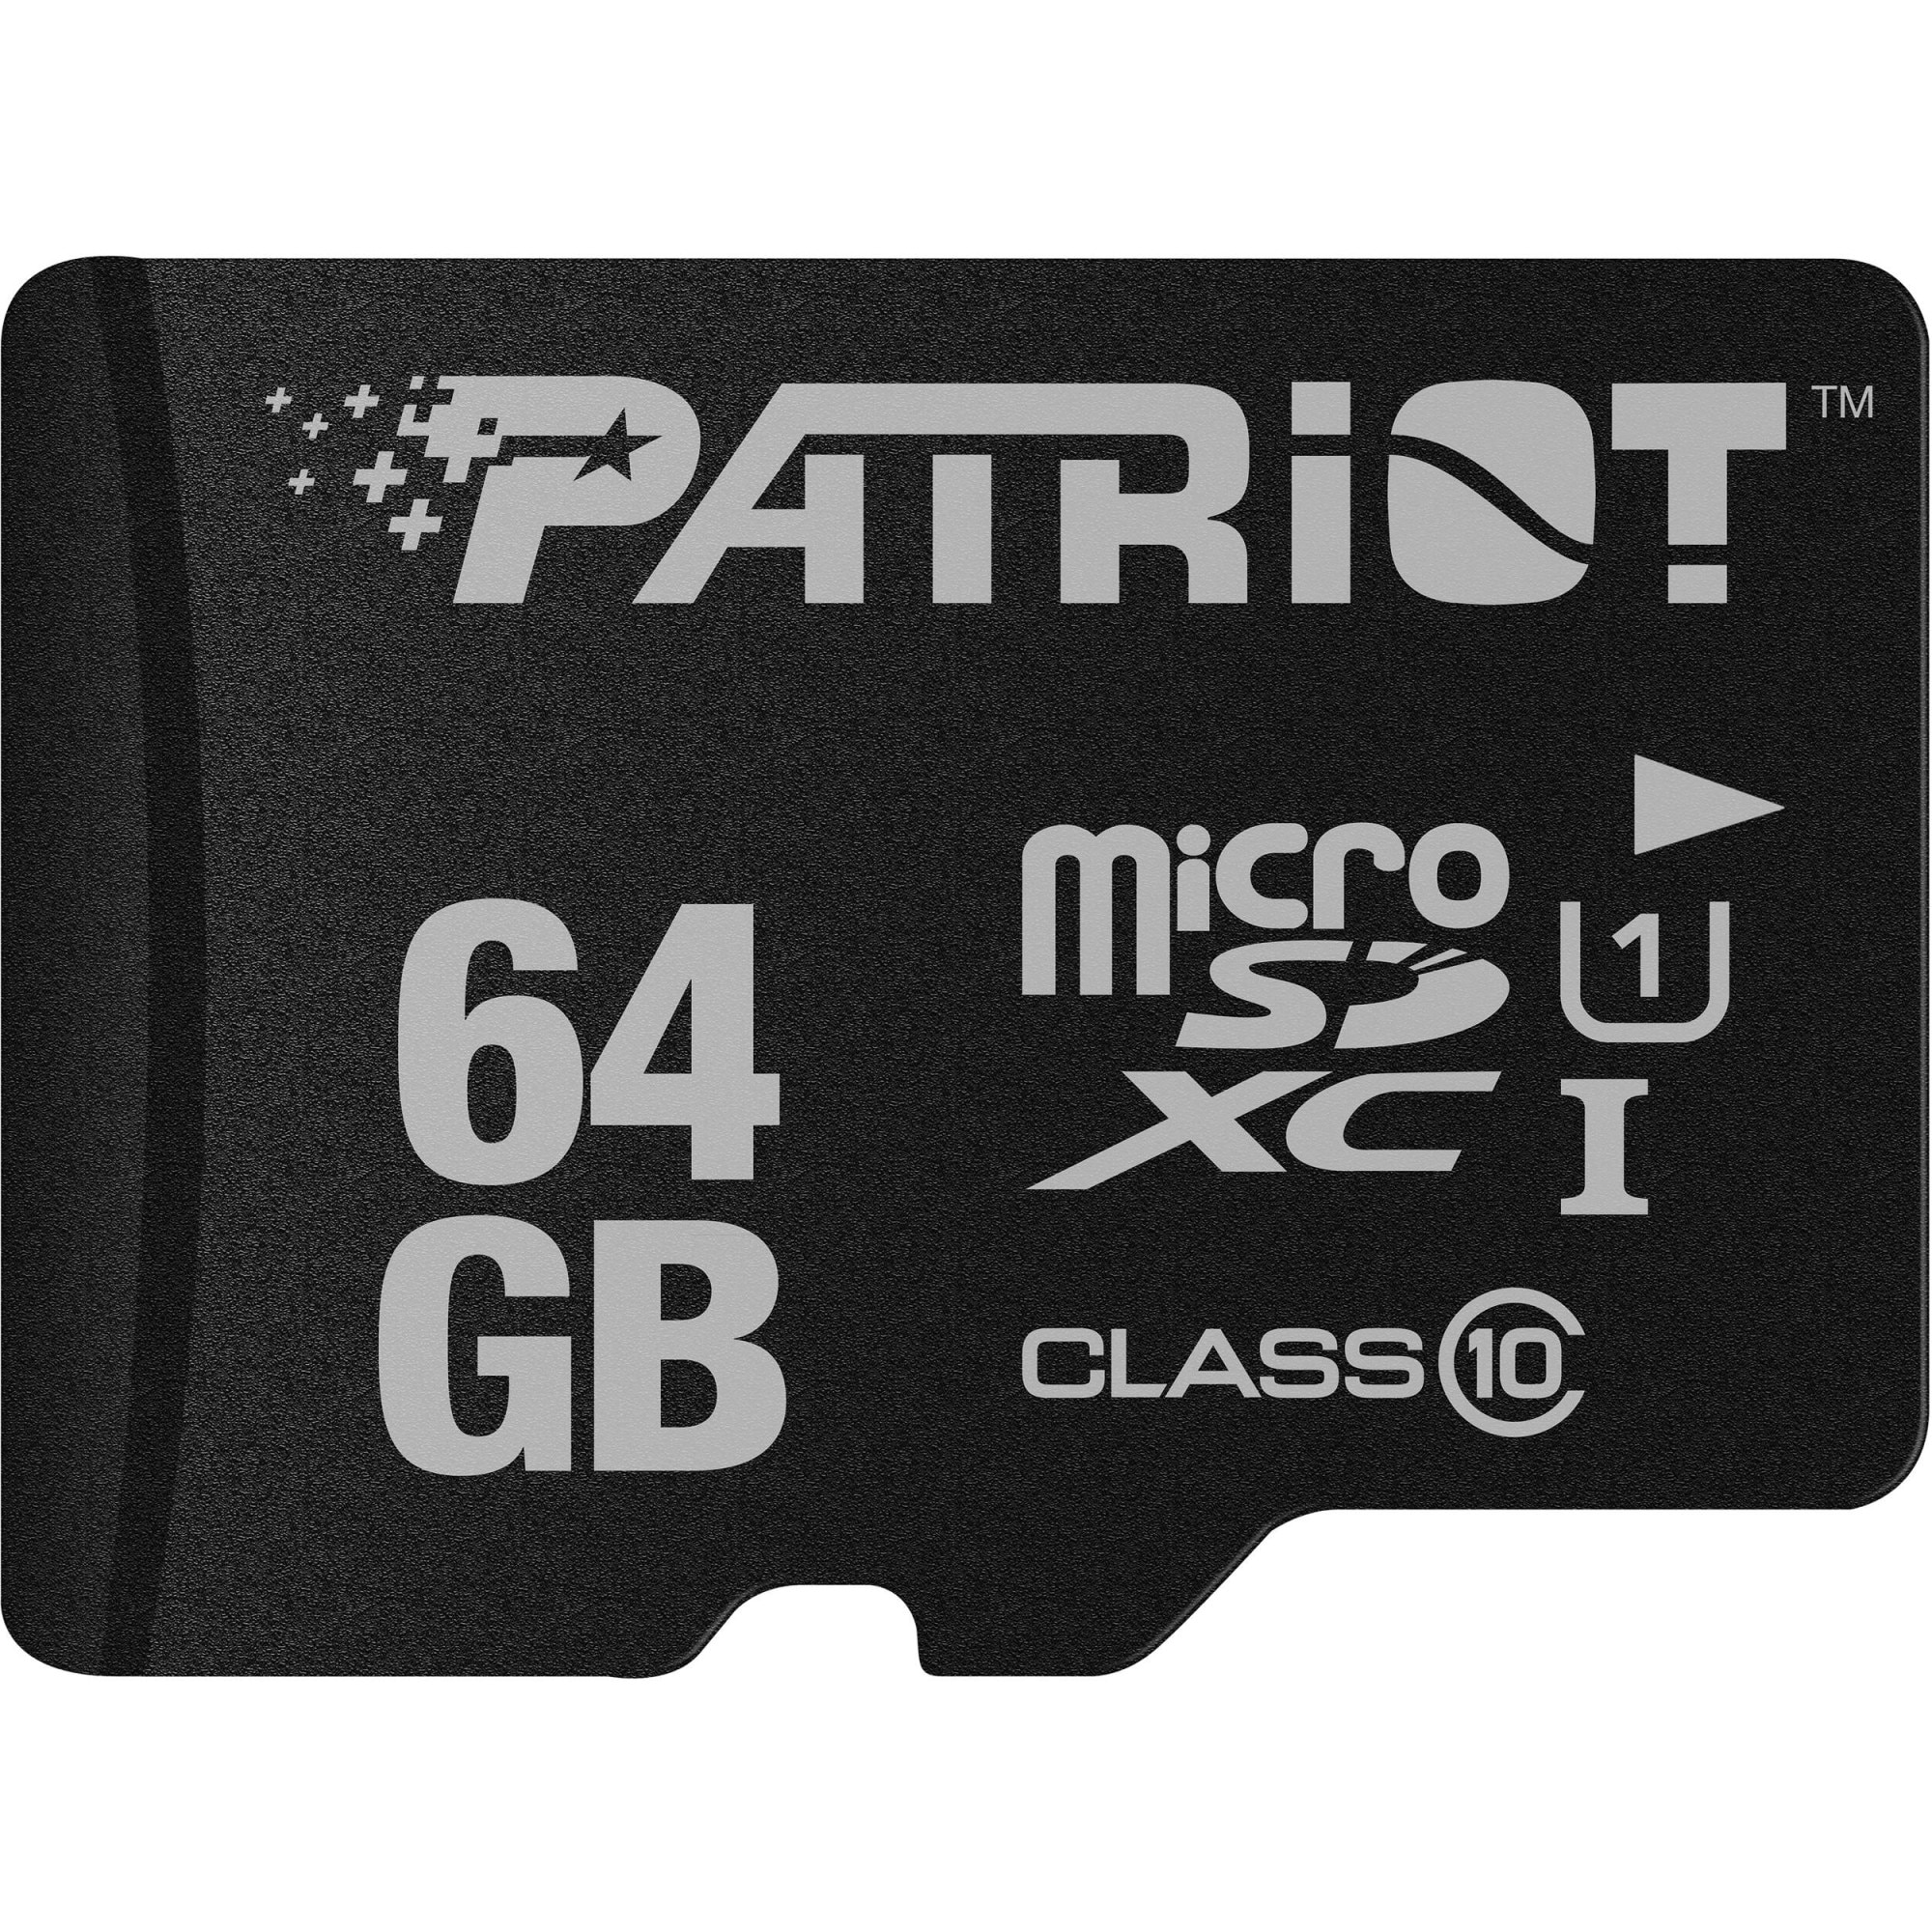 Card Micro Patriot Gb, clasa 10, fara SD - eMAG.ro